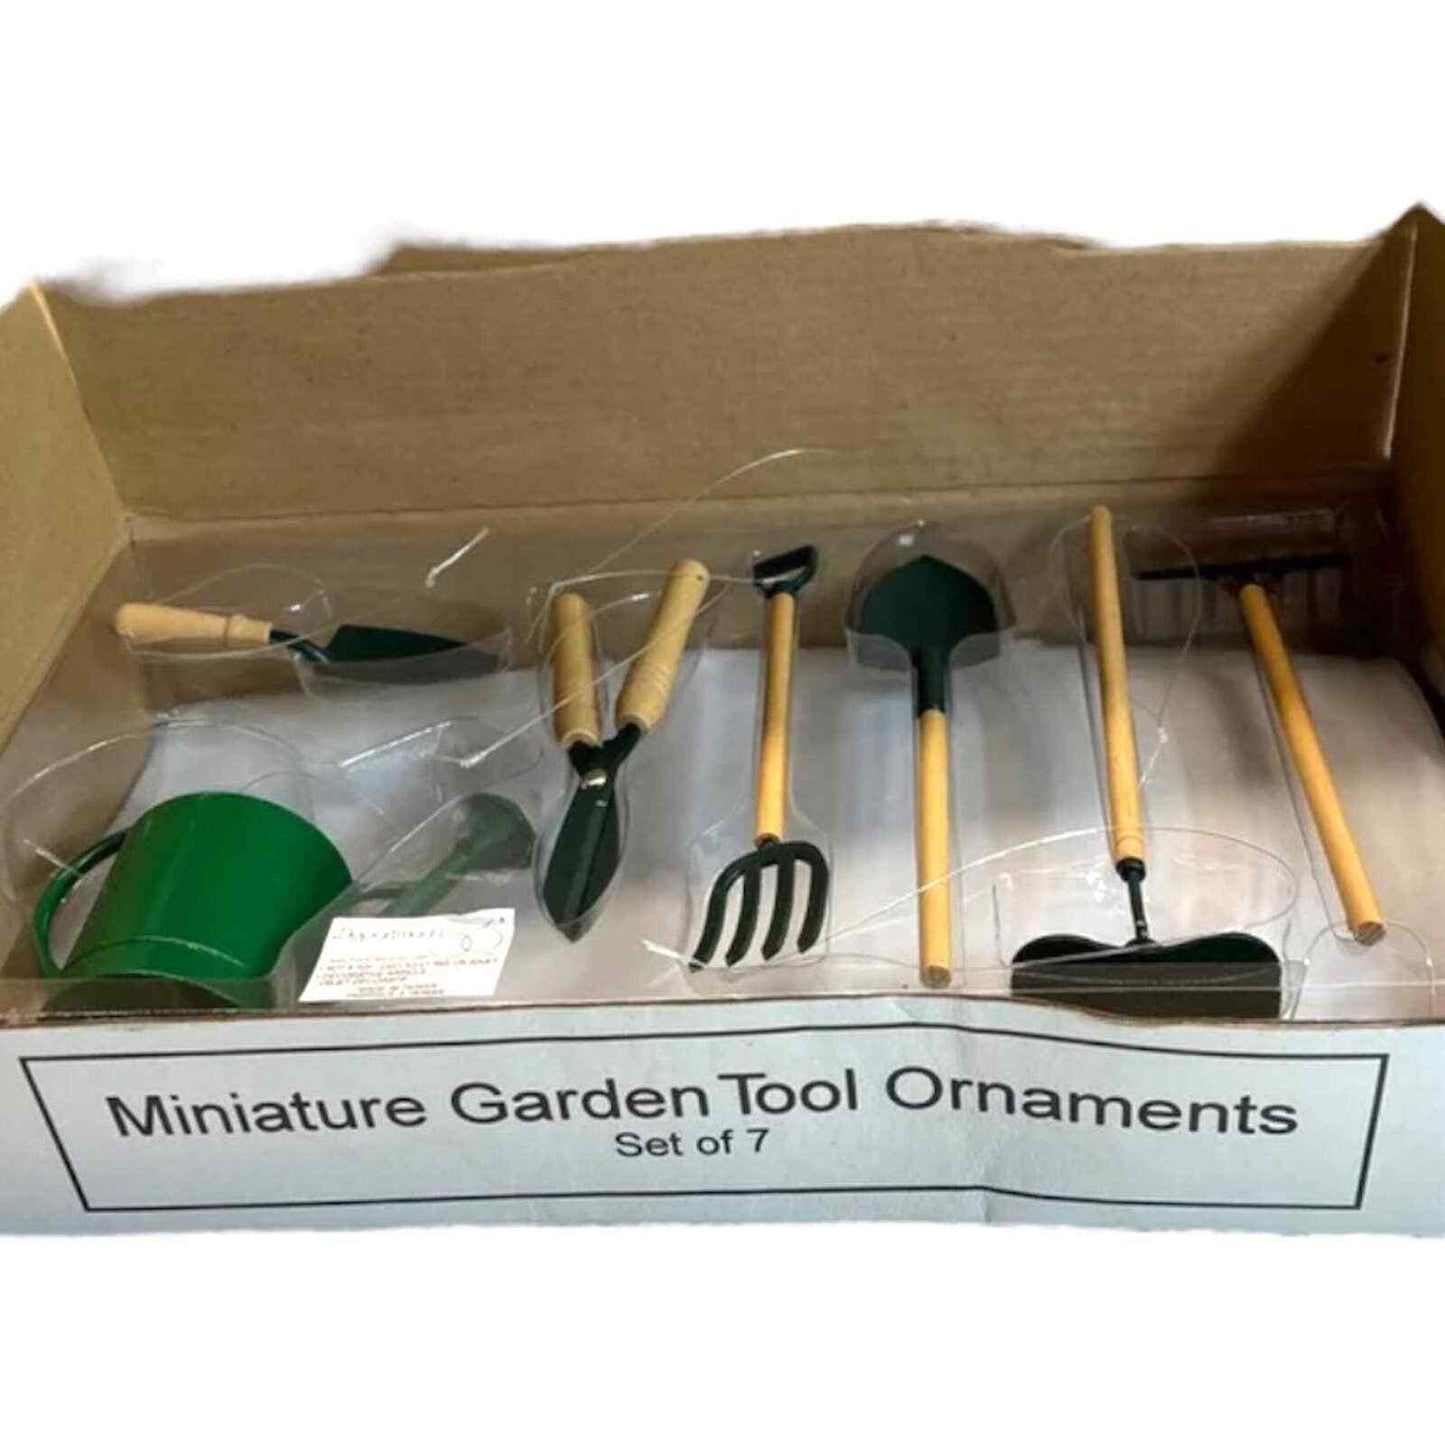 Department 56 Garden Tool Miniature Ornaments Set 7 pieces Shovel Rack Watering